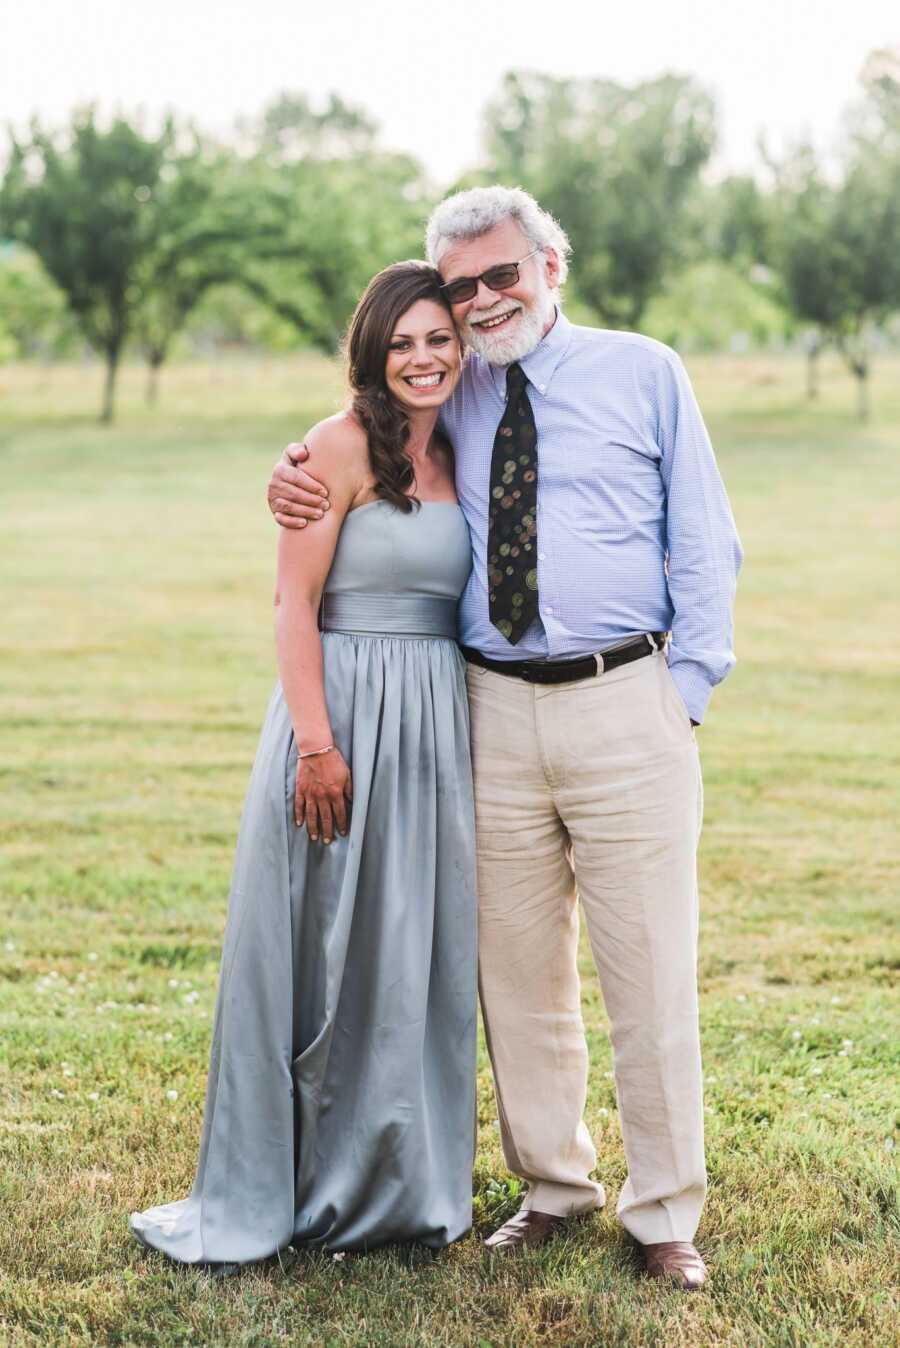 Woman smiling in light blue dress alongside father